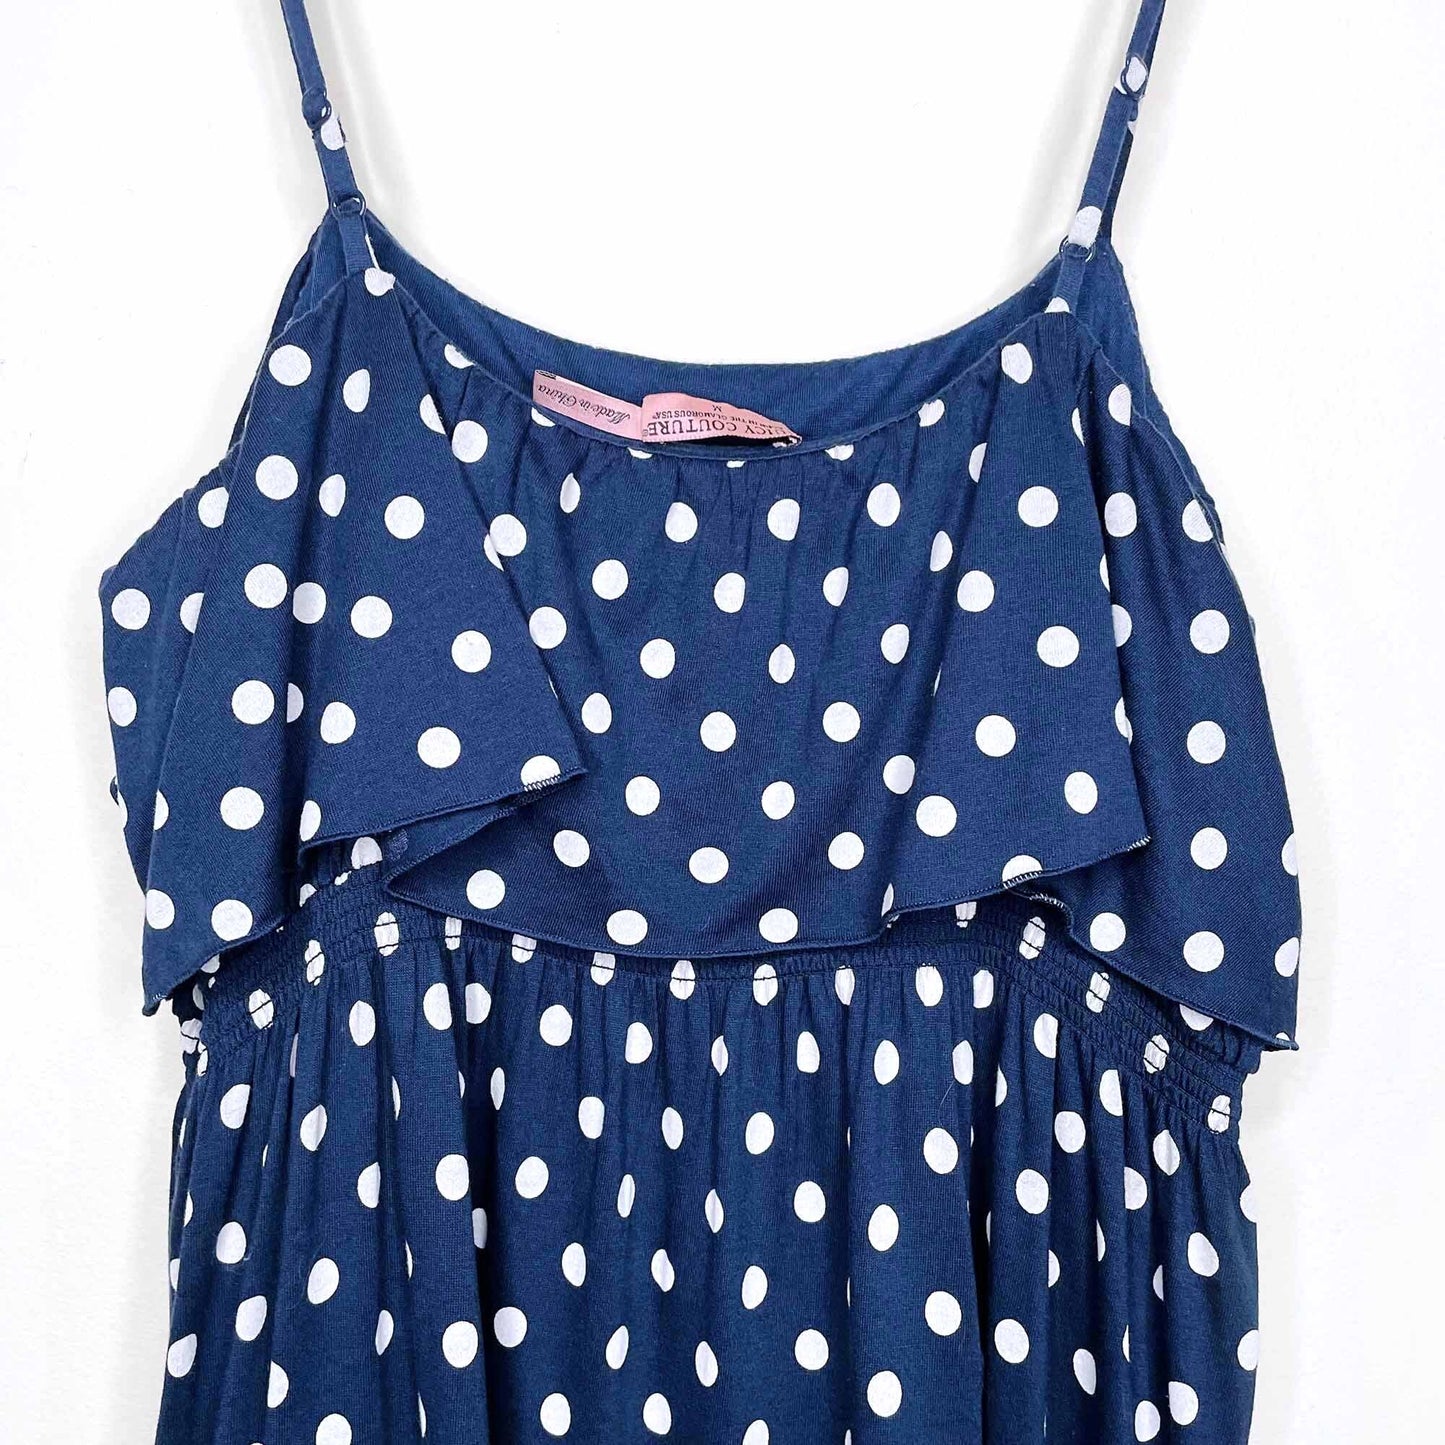 juicy couture blue polka dot ruffle summer dress - size medium